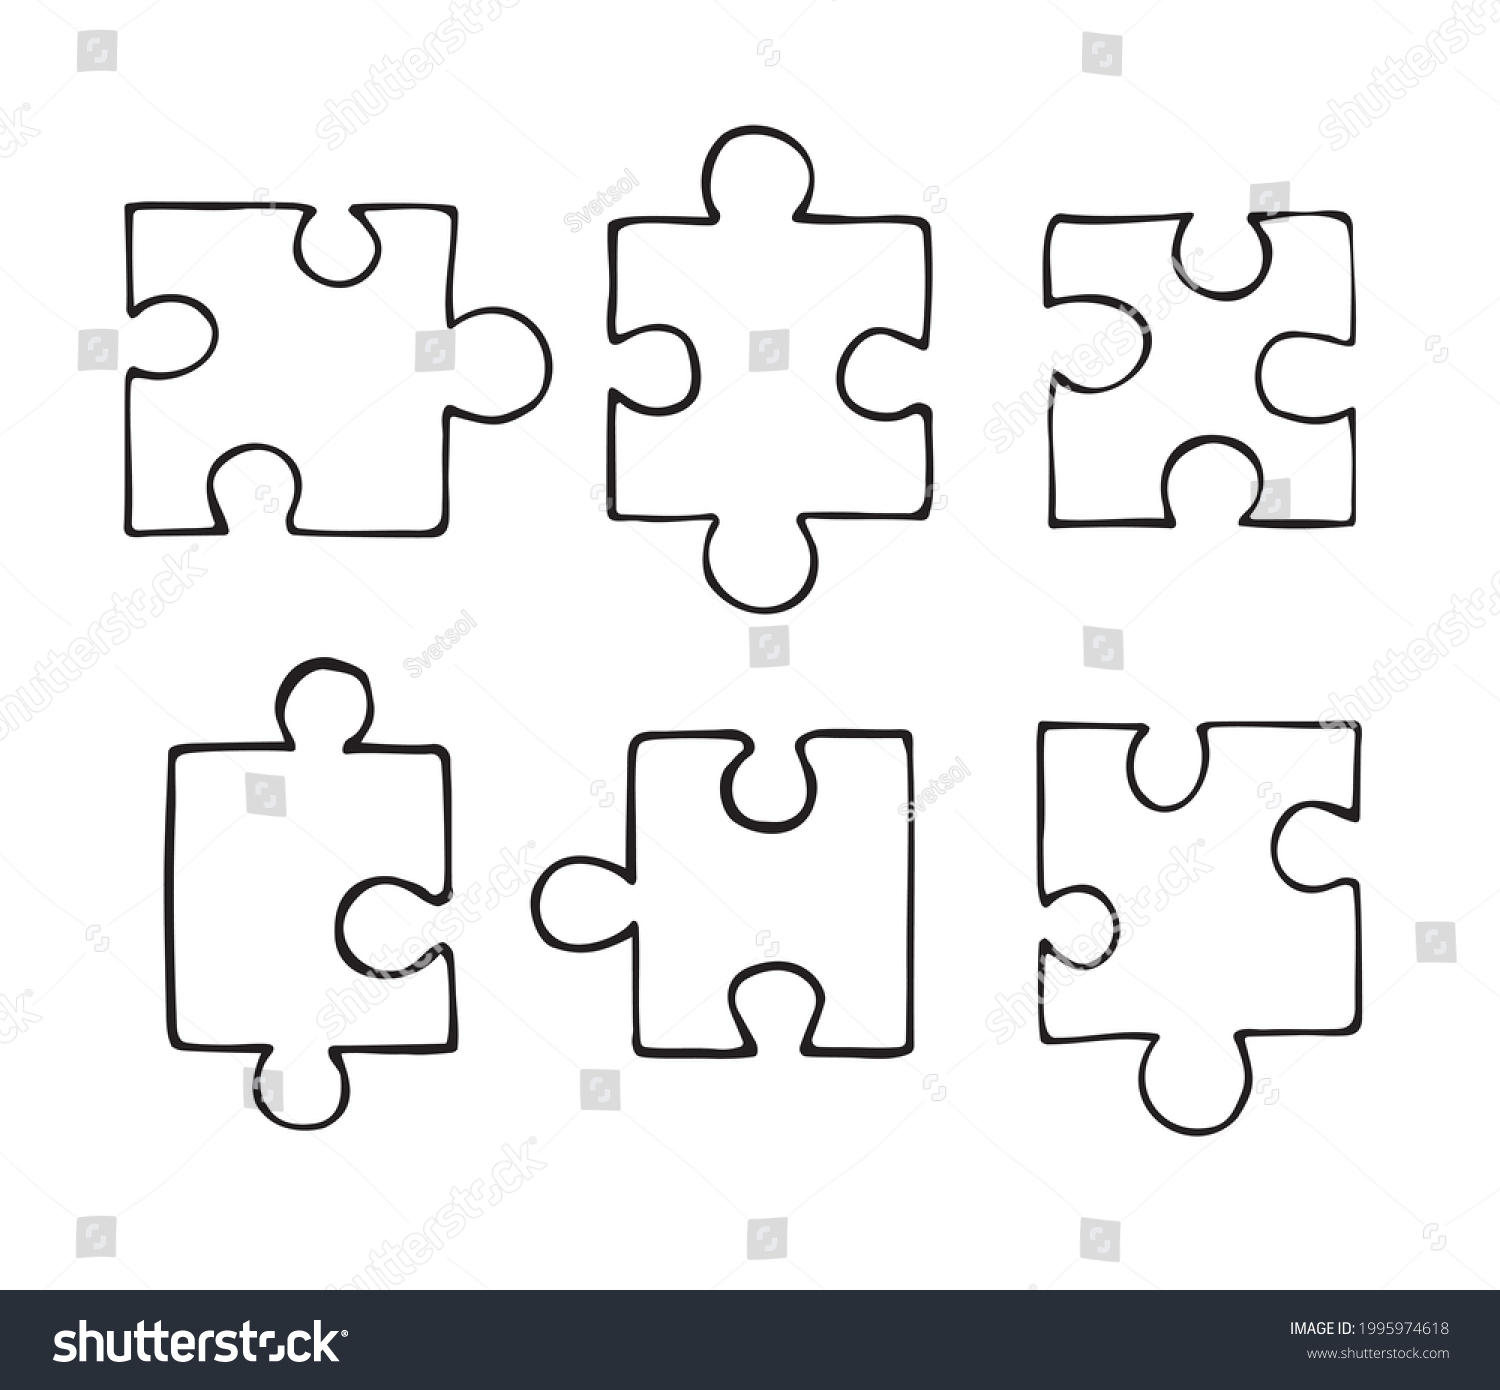 Sketch puzzle pieces Images, Stock Photos & Vectors Shutterstock